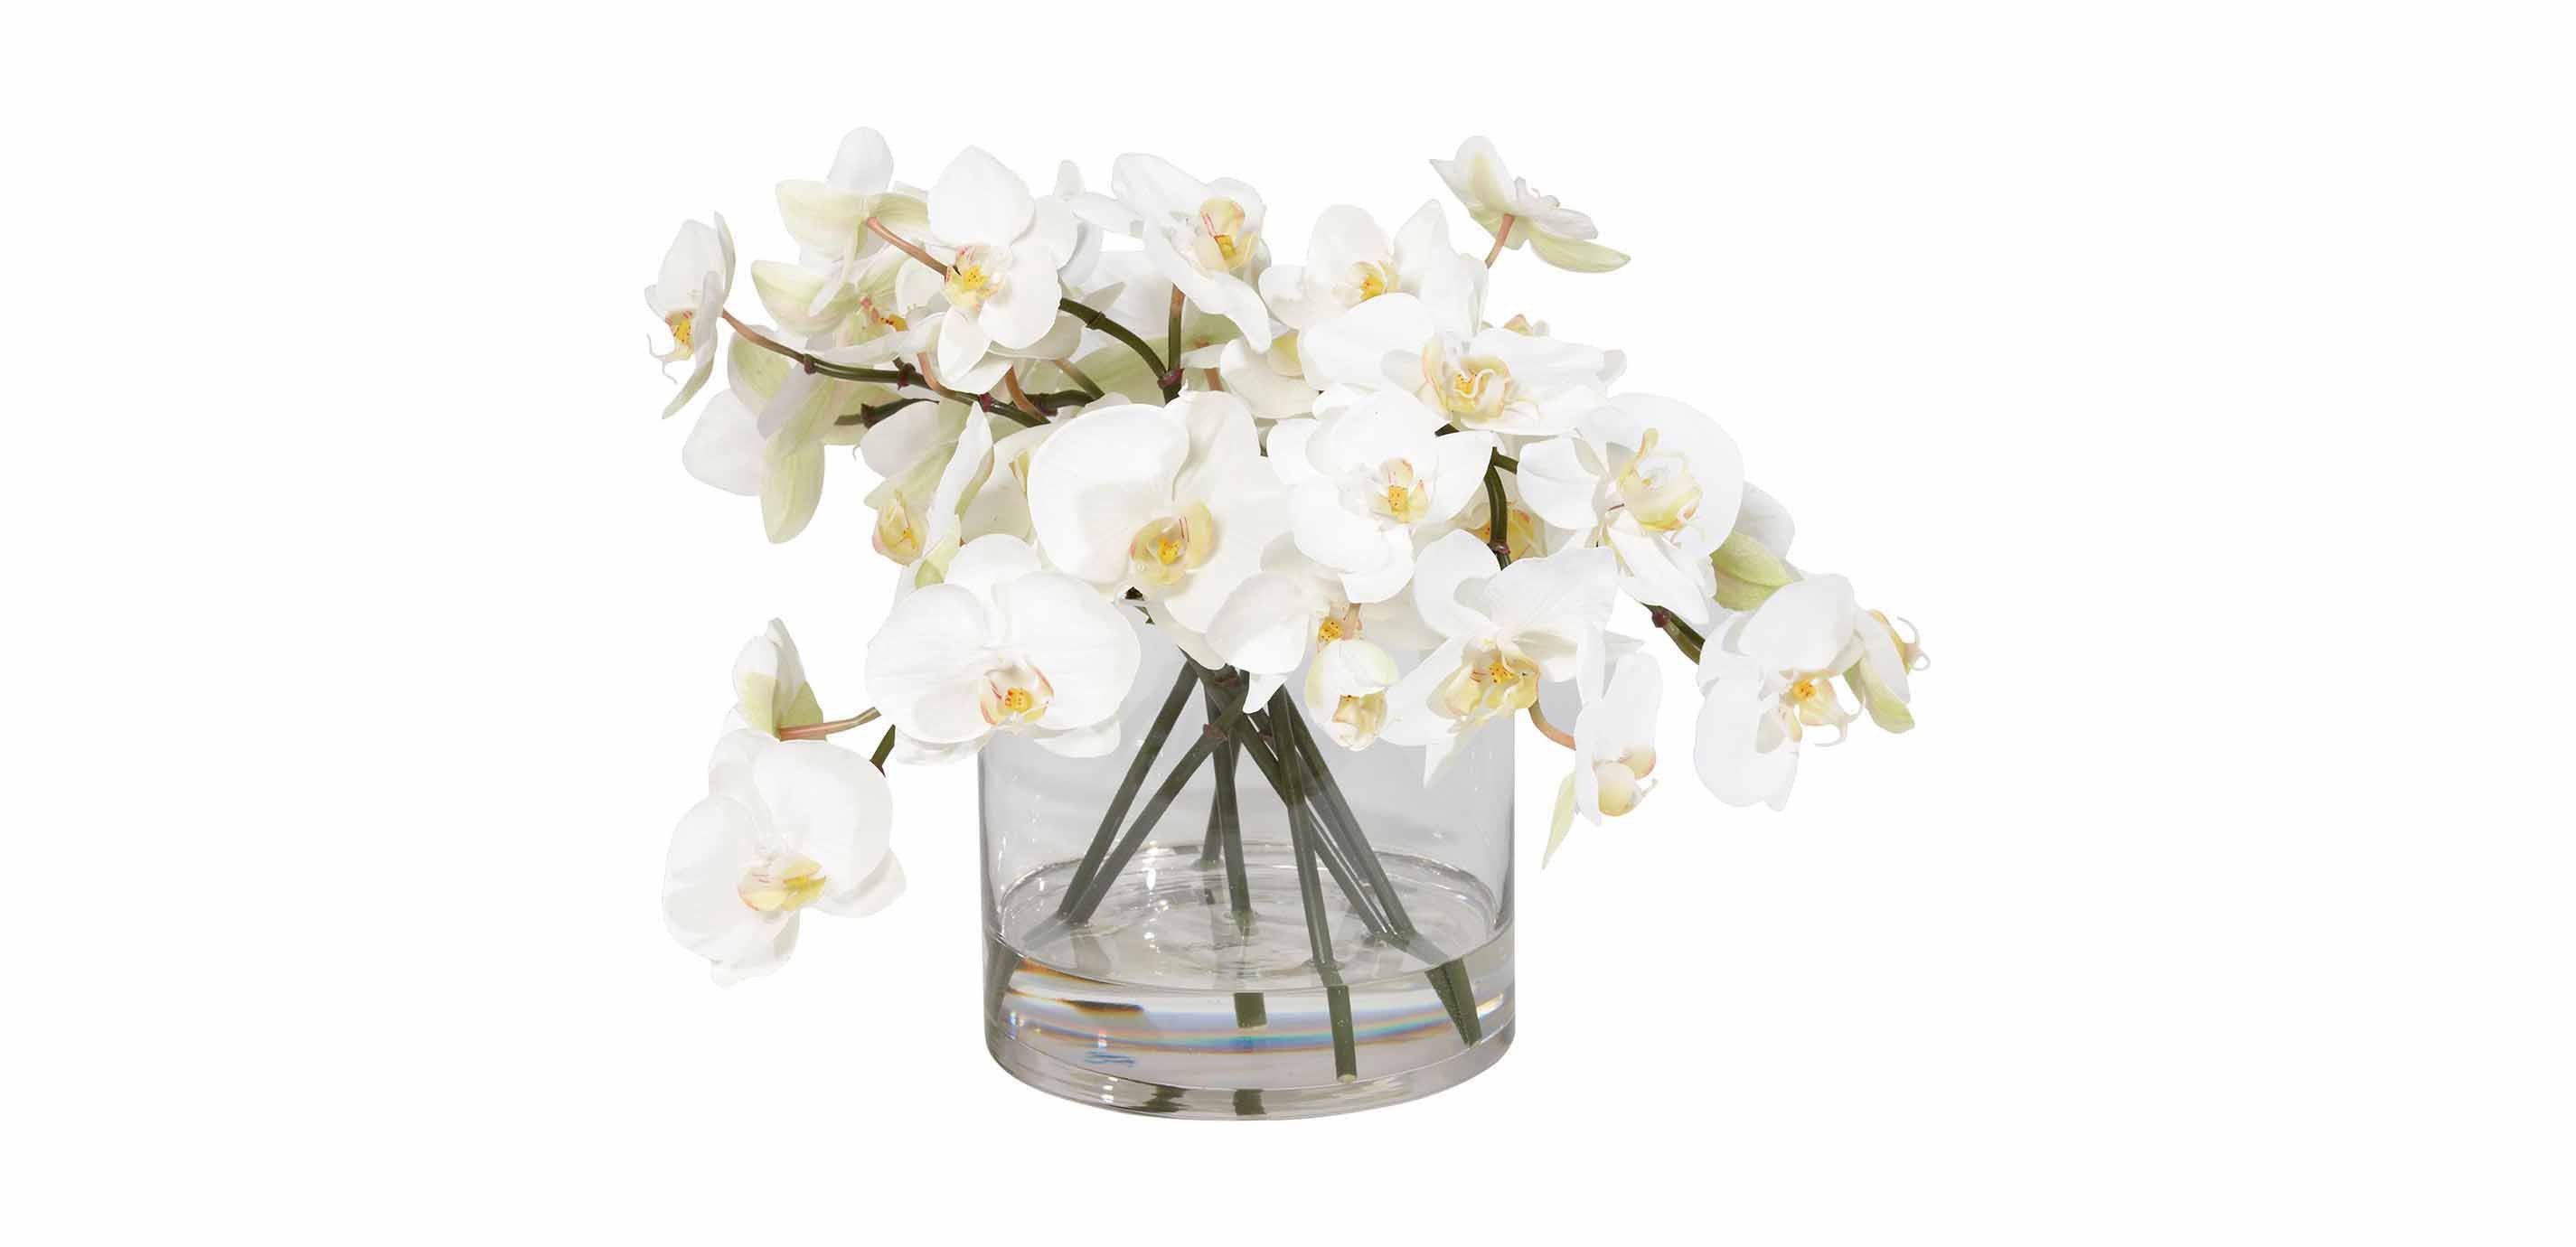 Boos bevroren Reinig de vloer White Orchids in Glass Cylinder | FLORALS & TREES | Ethan Allen